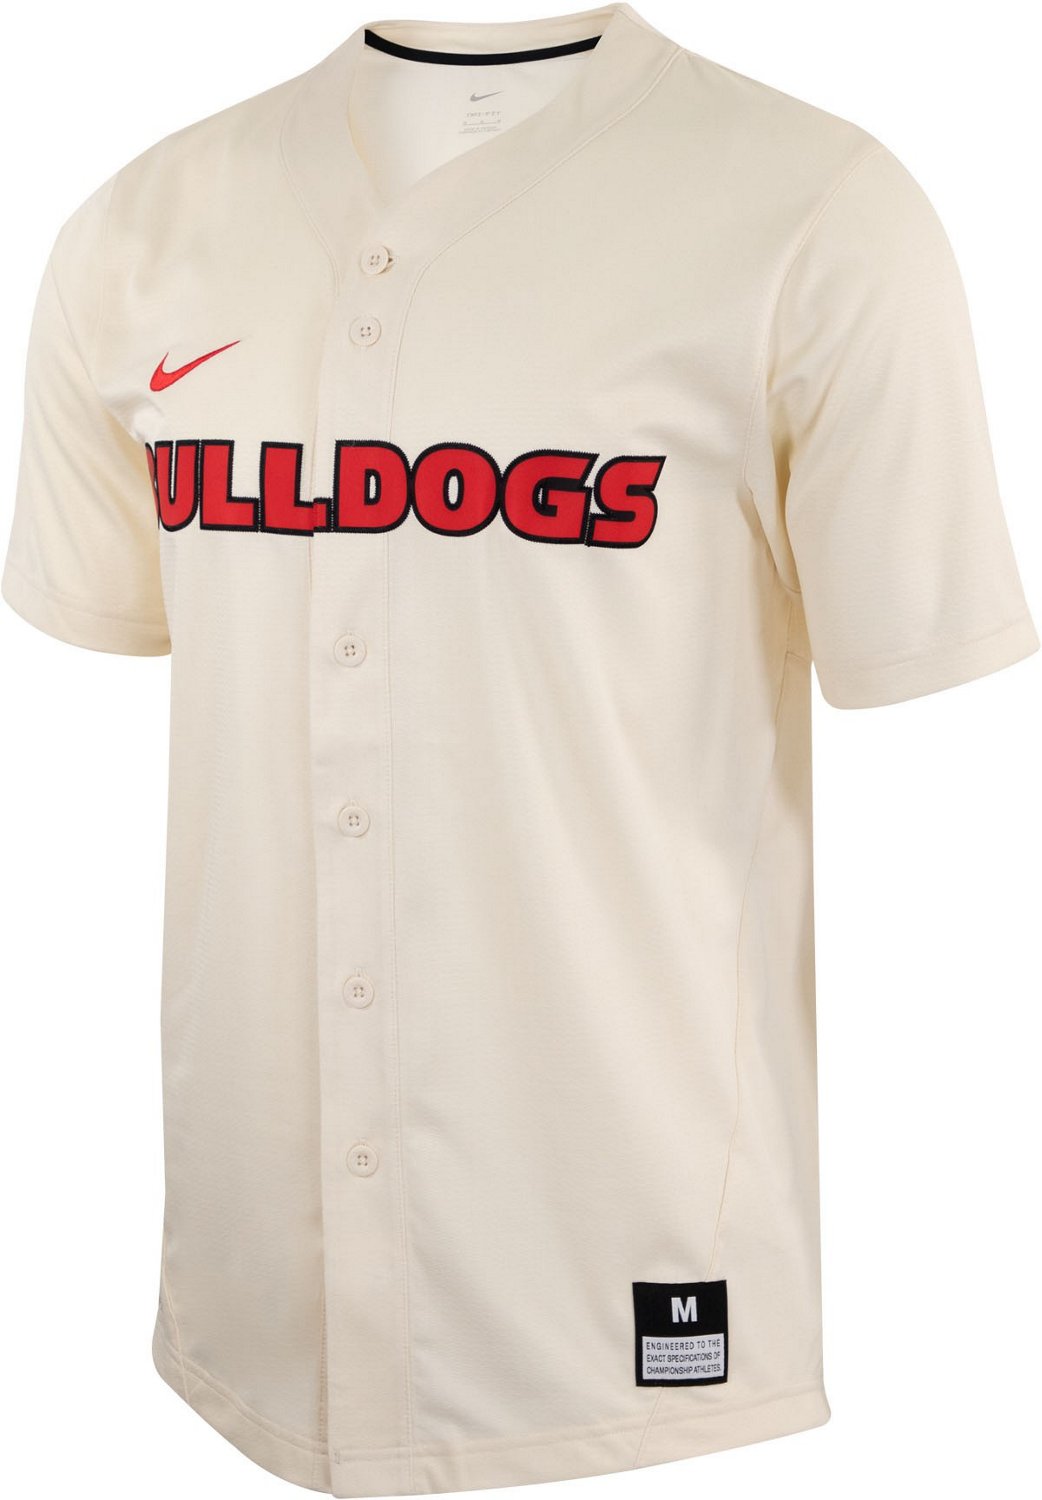 Georgia Bulldogs Shirts, Apparel, & Gear